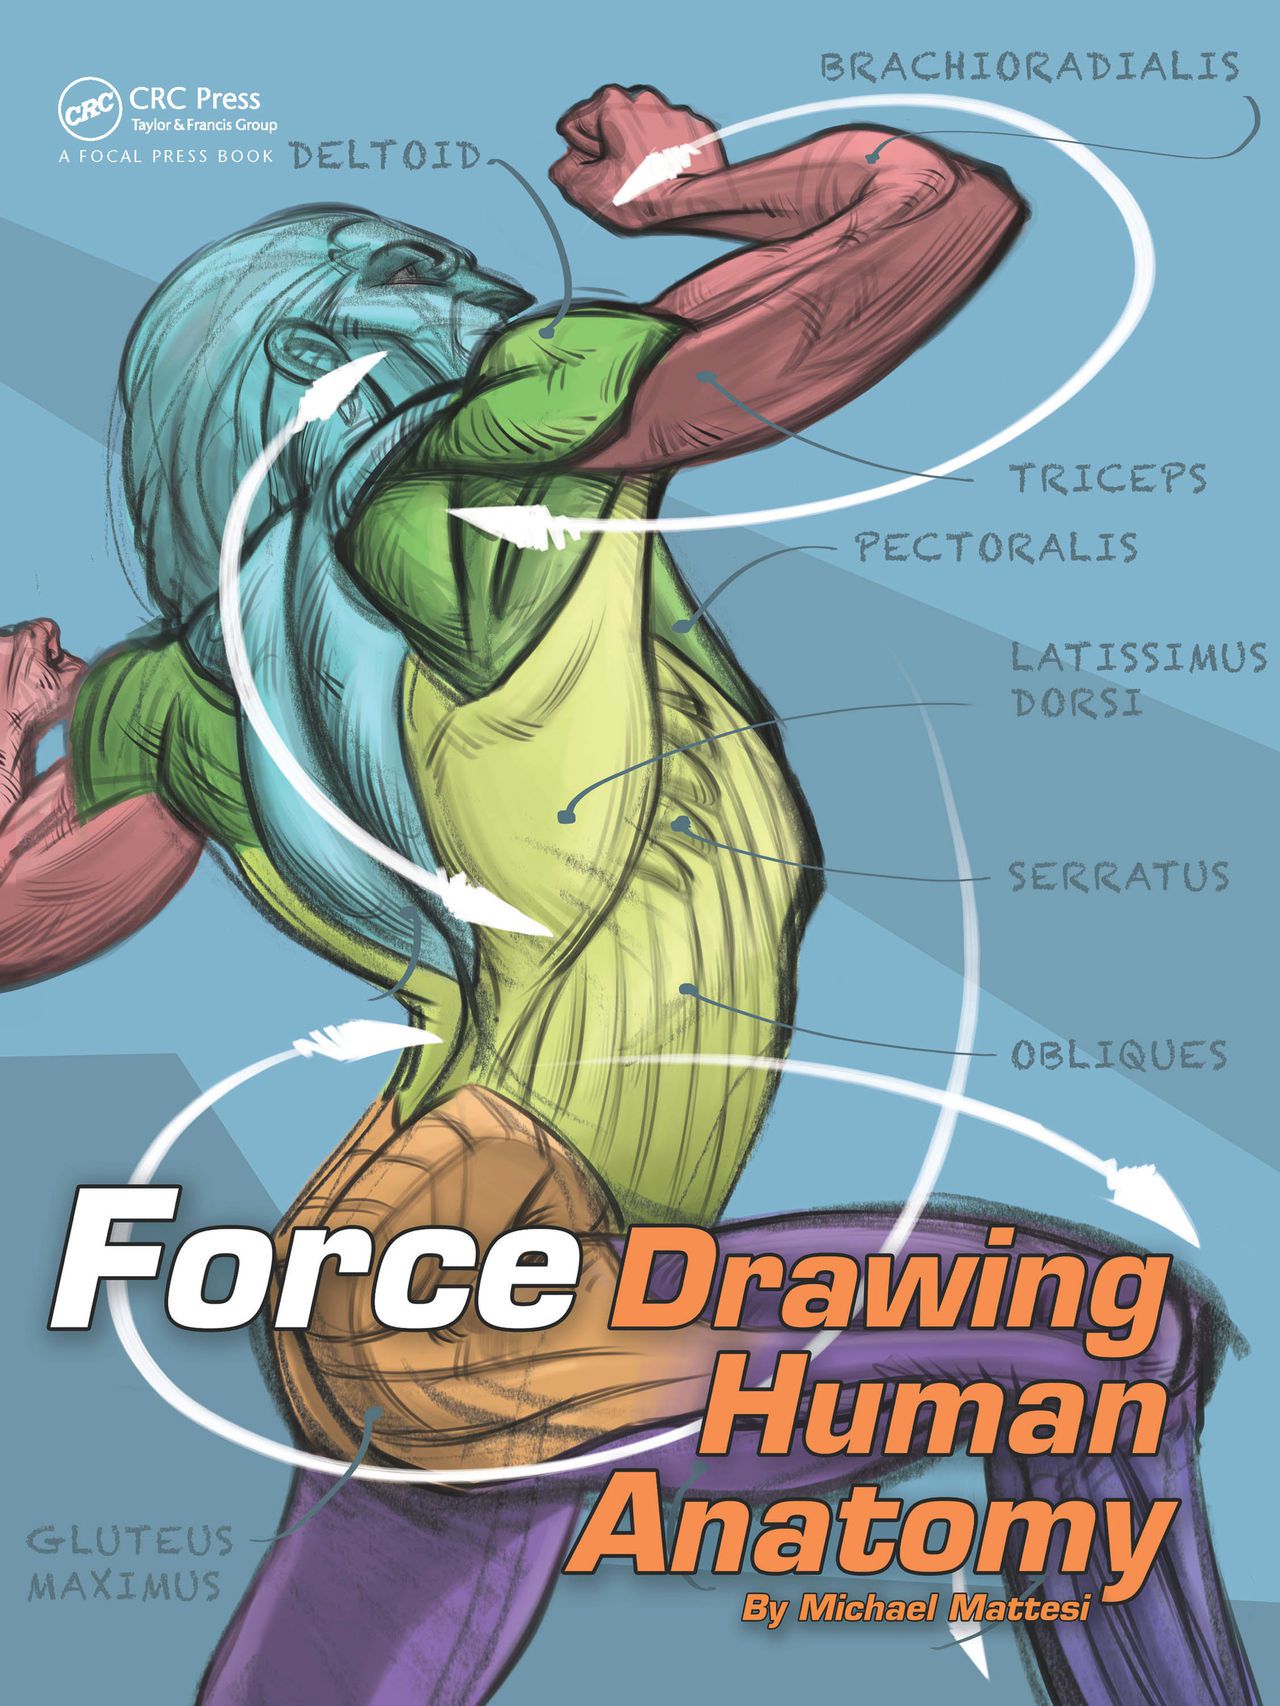 Force. Drawing human anatomy - Michael D. Mattesi [Digital] 1